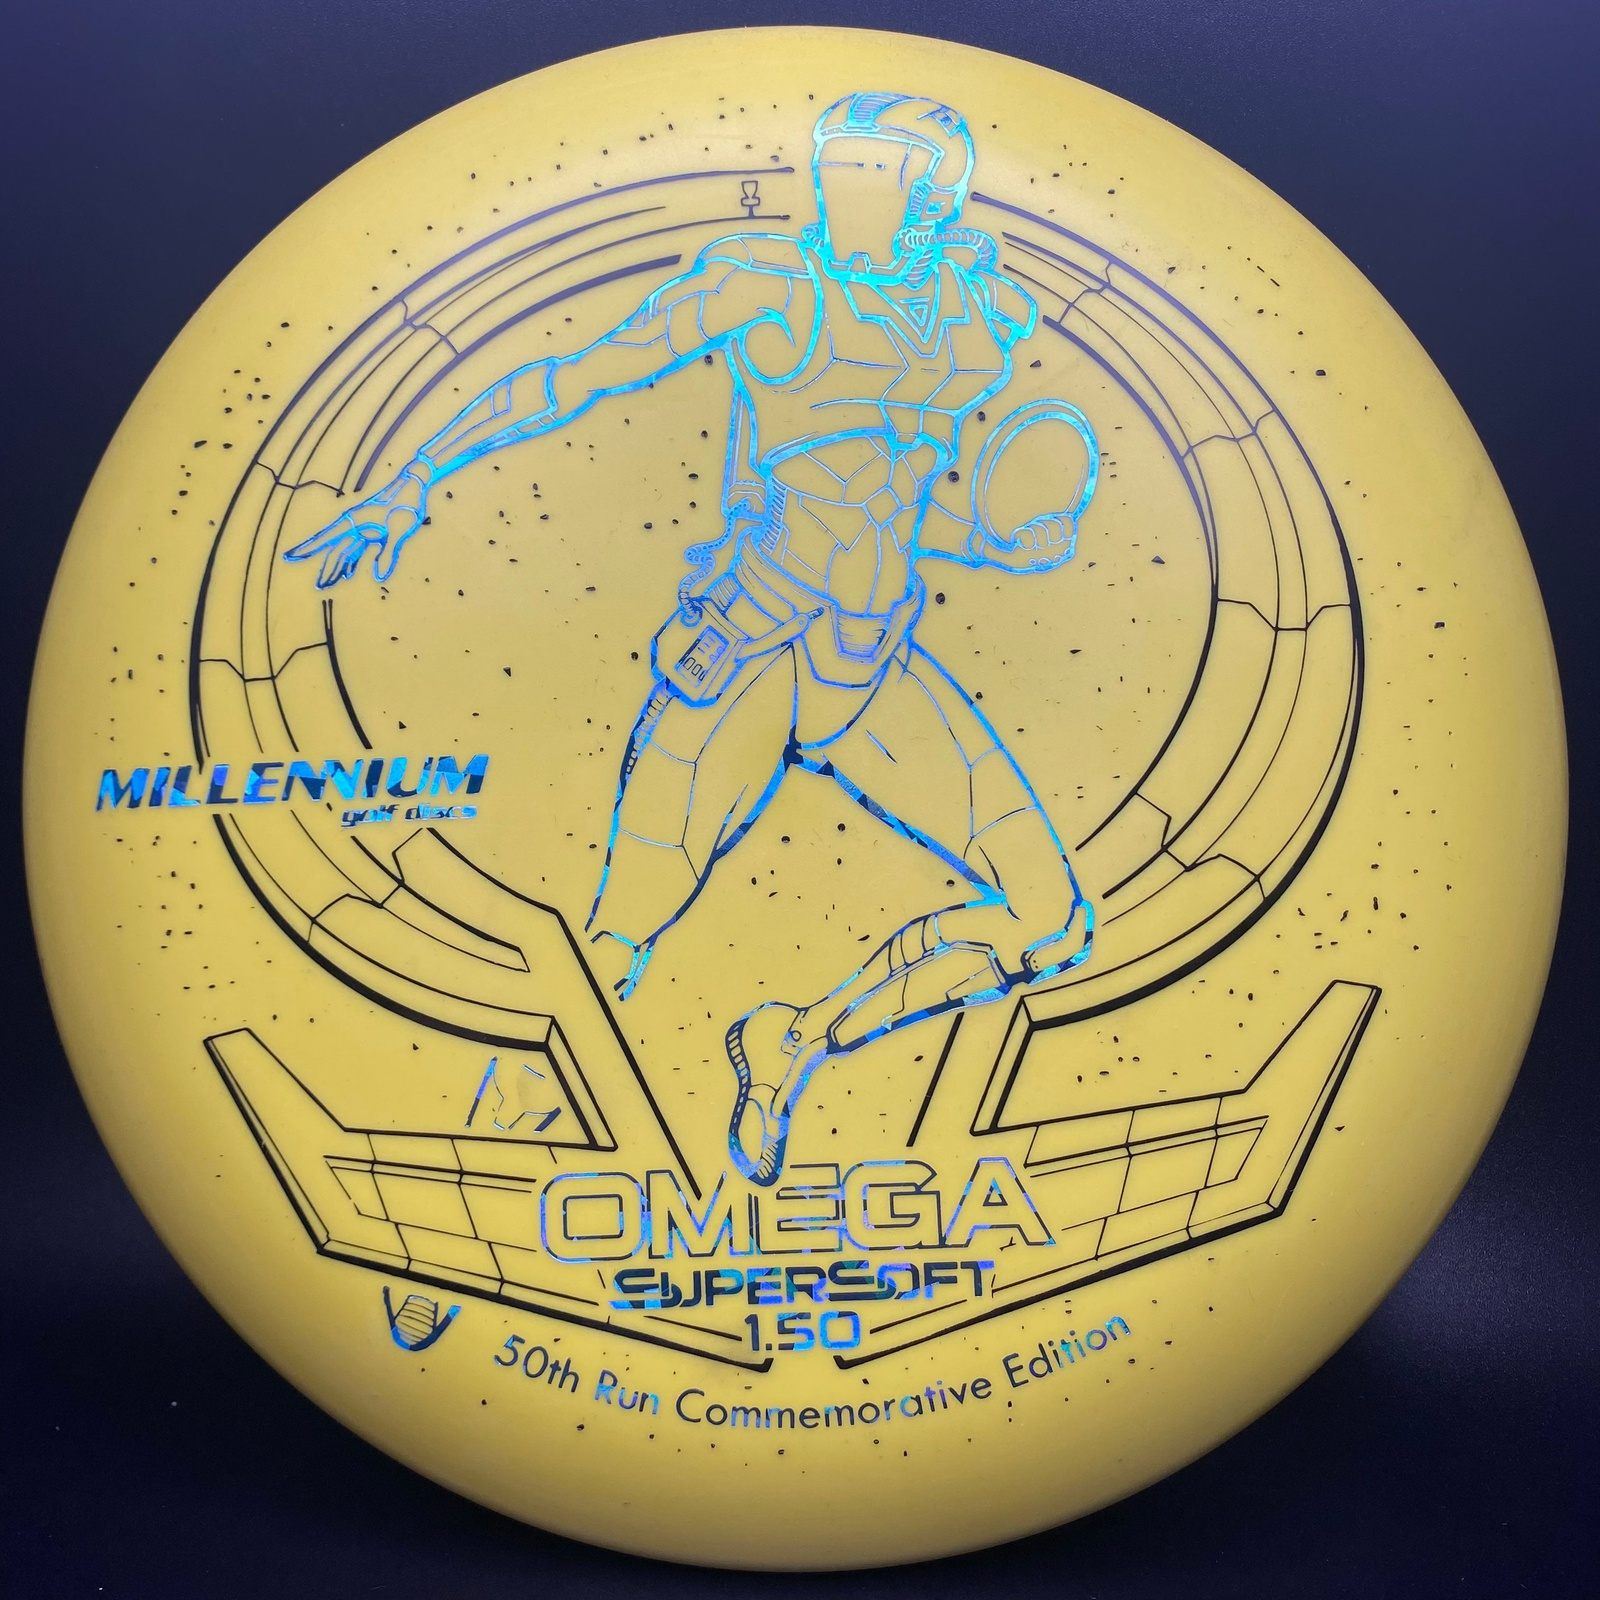 Omega SuperSoft - 50th Run CE Millennium